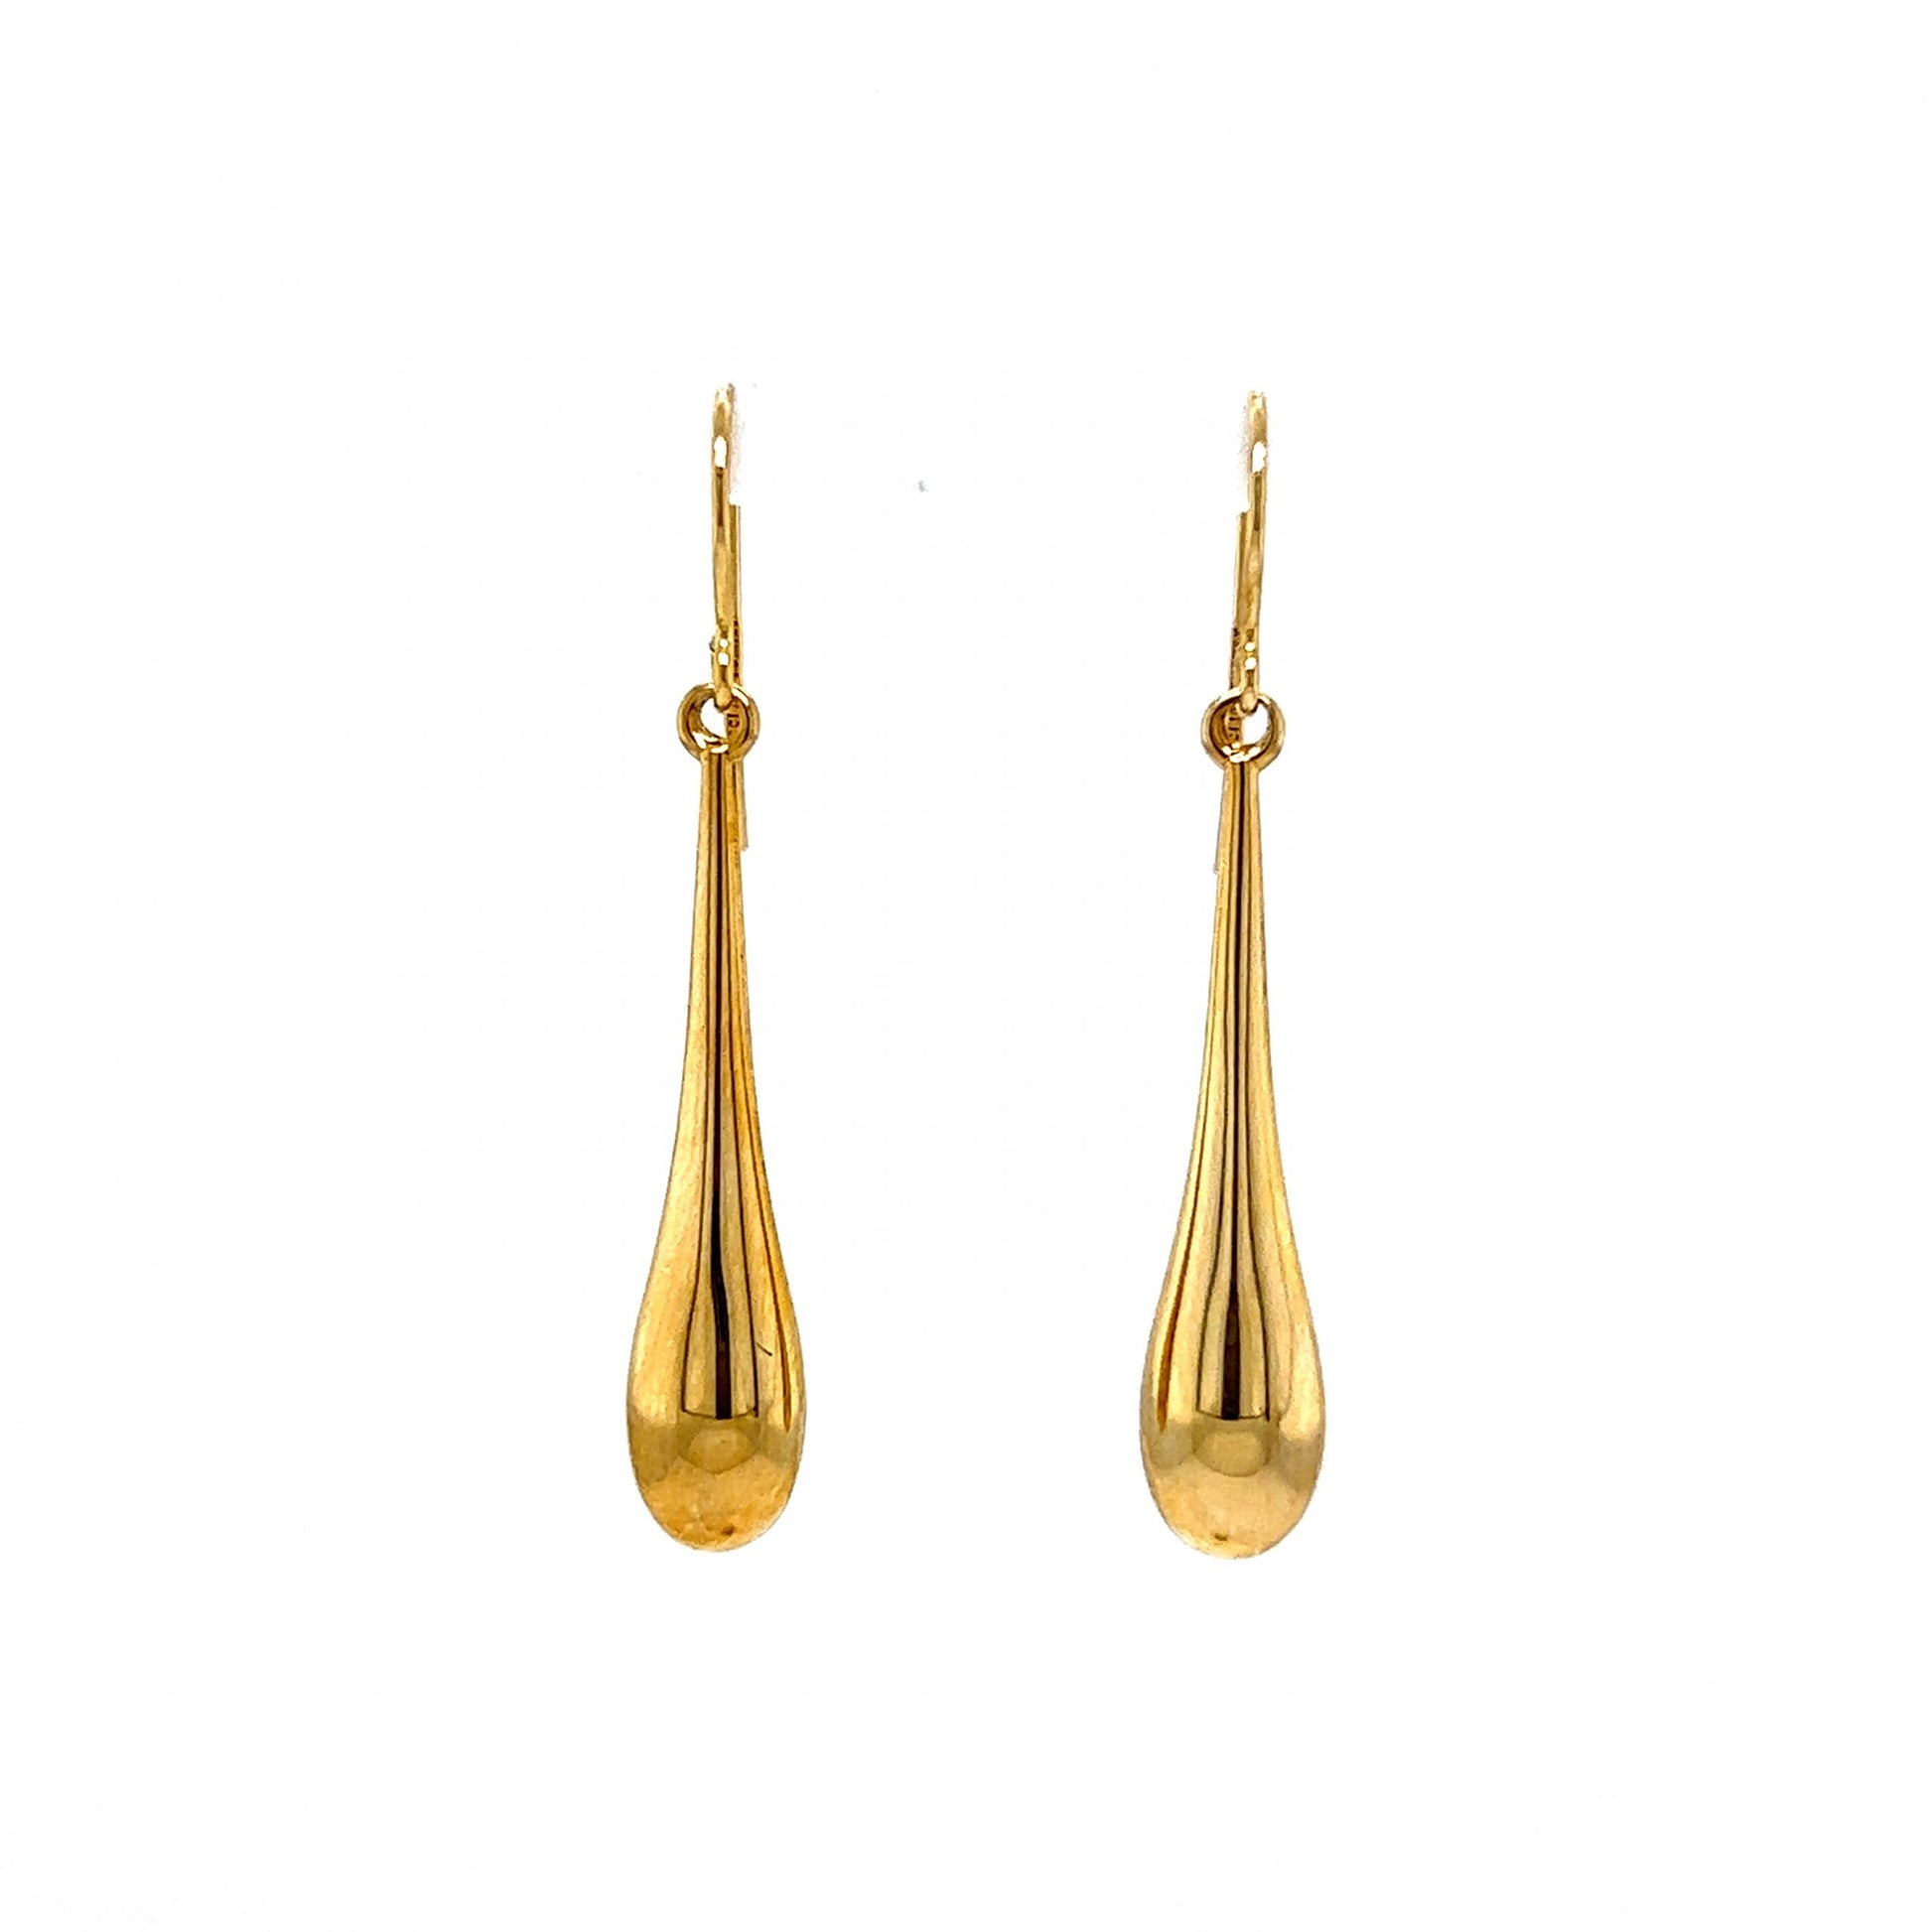 Elongated Raindrop Earrings in 10k Yellow Gold